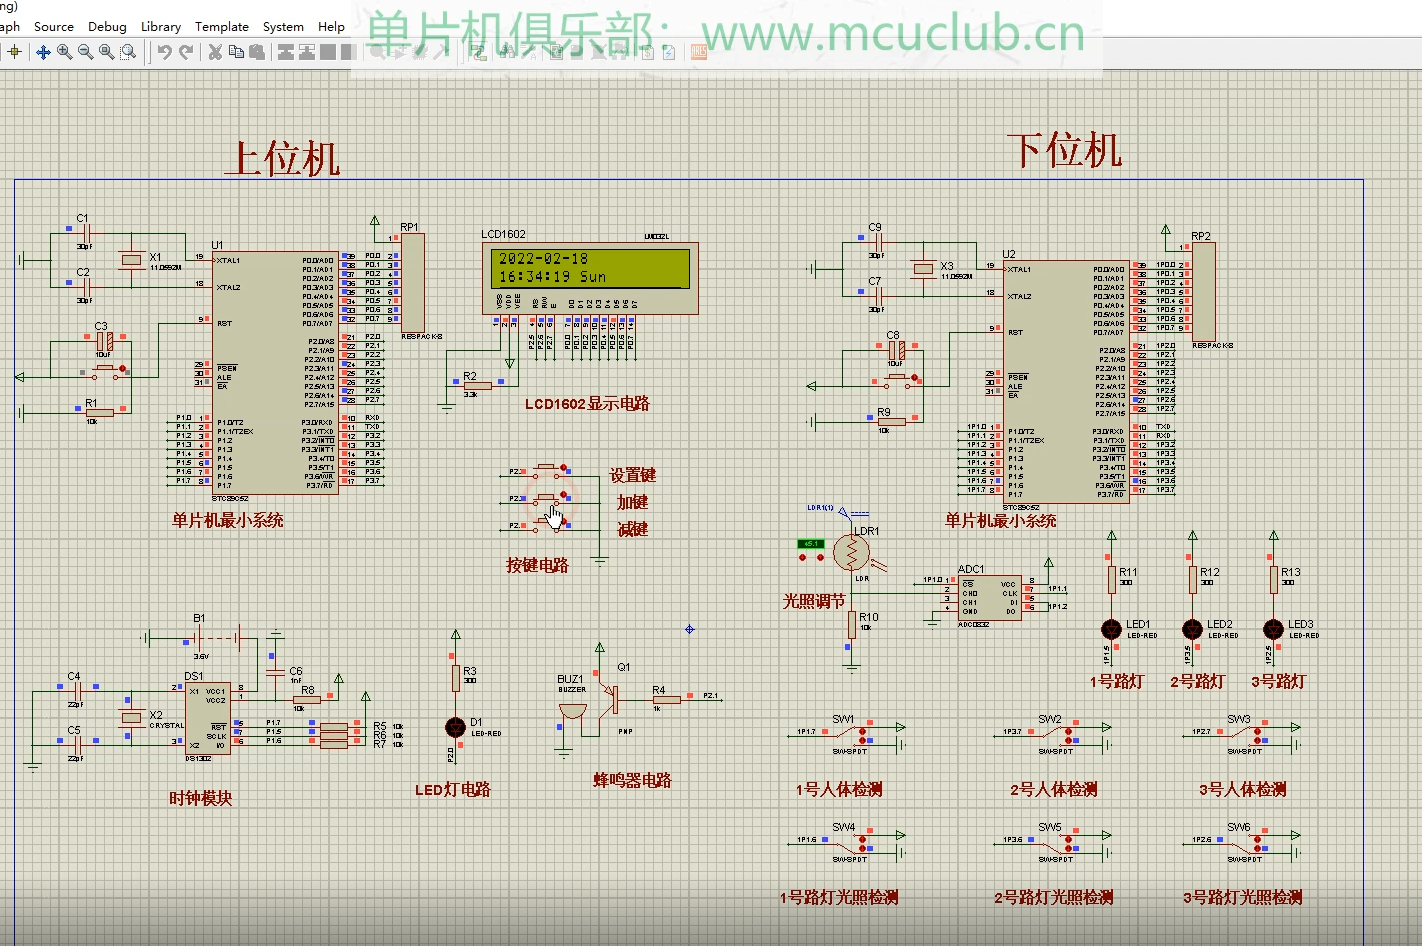 【mcuclub-456】基于单片机的路灯控制设计【仿真设计】